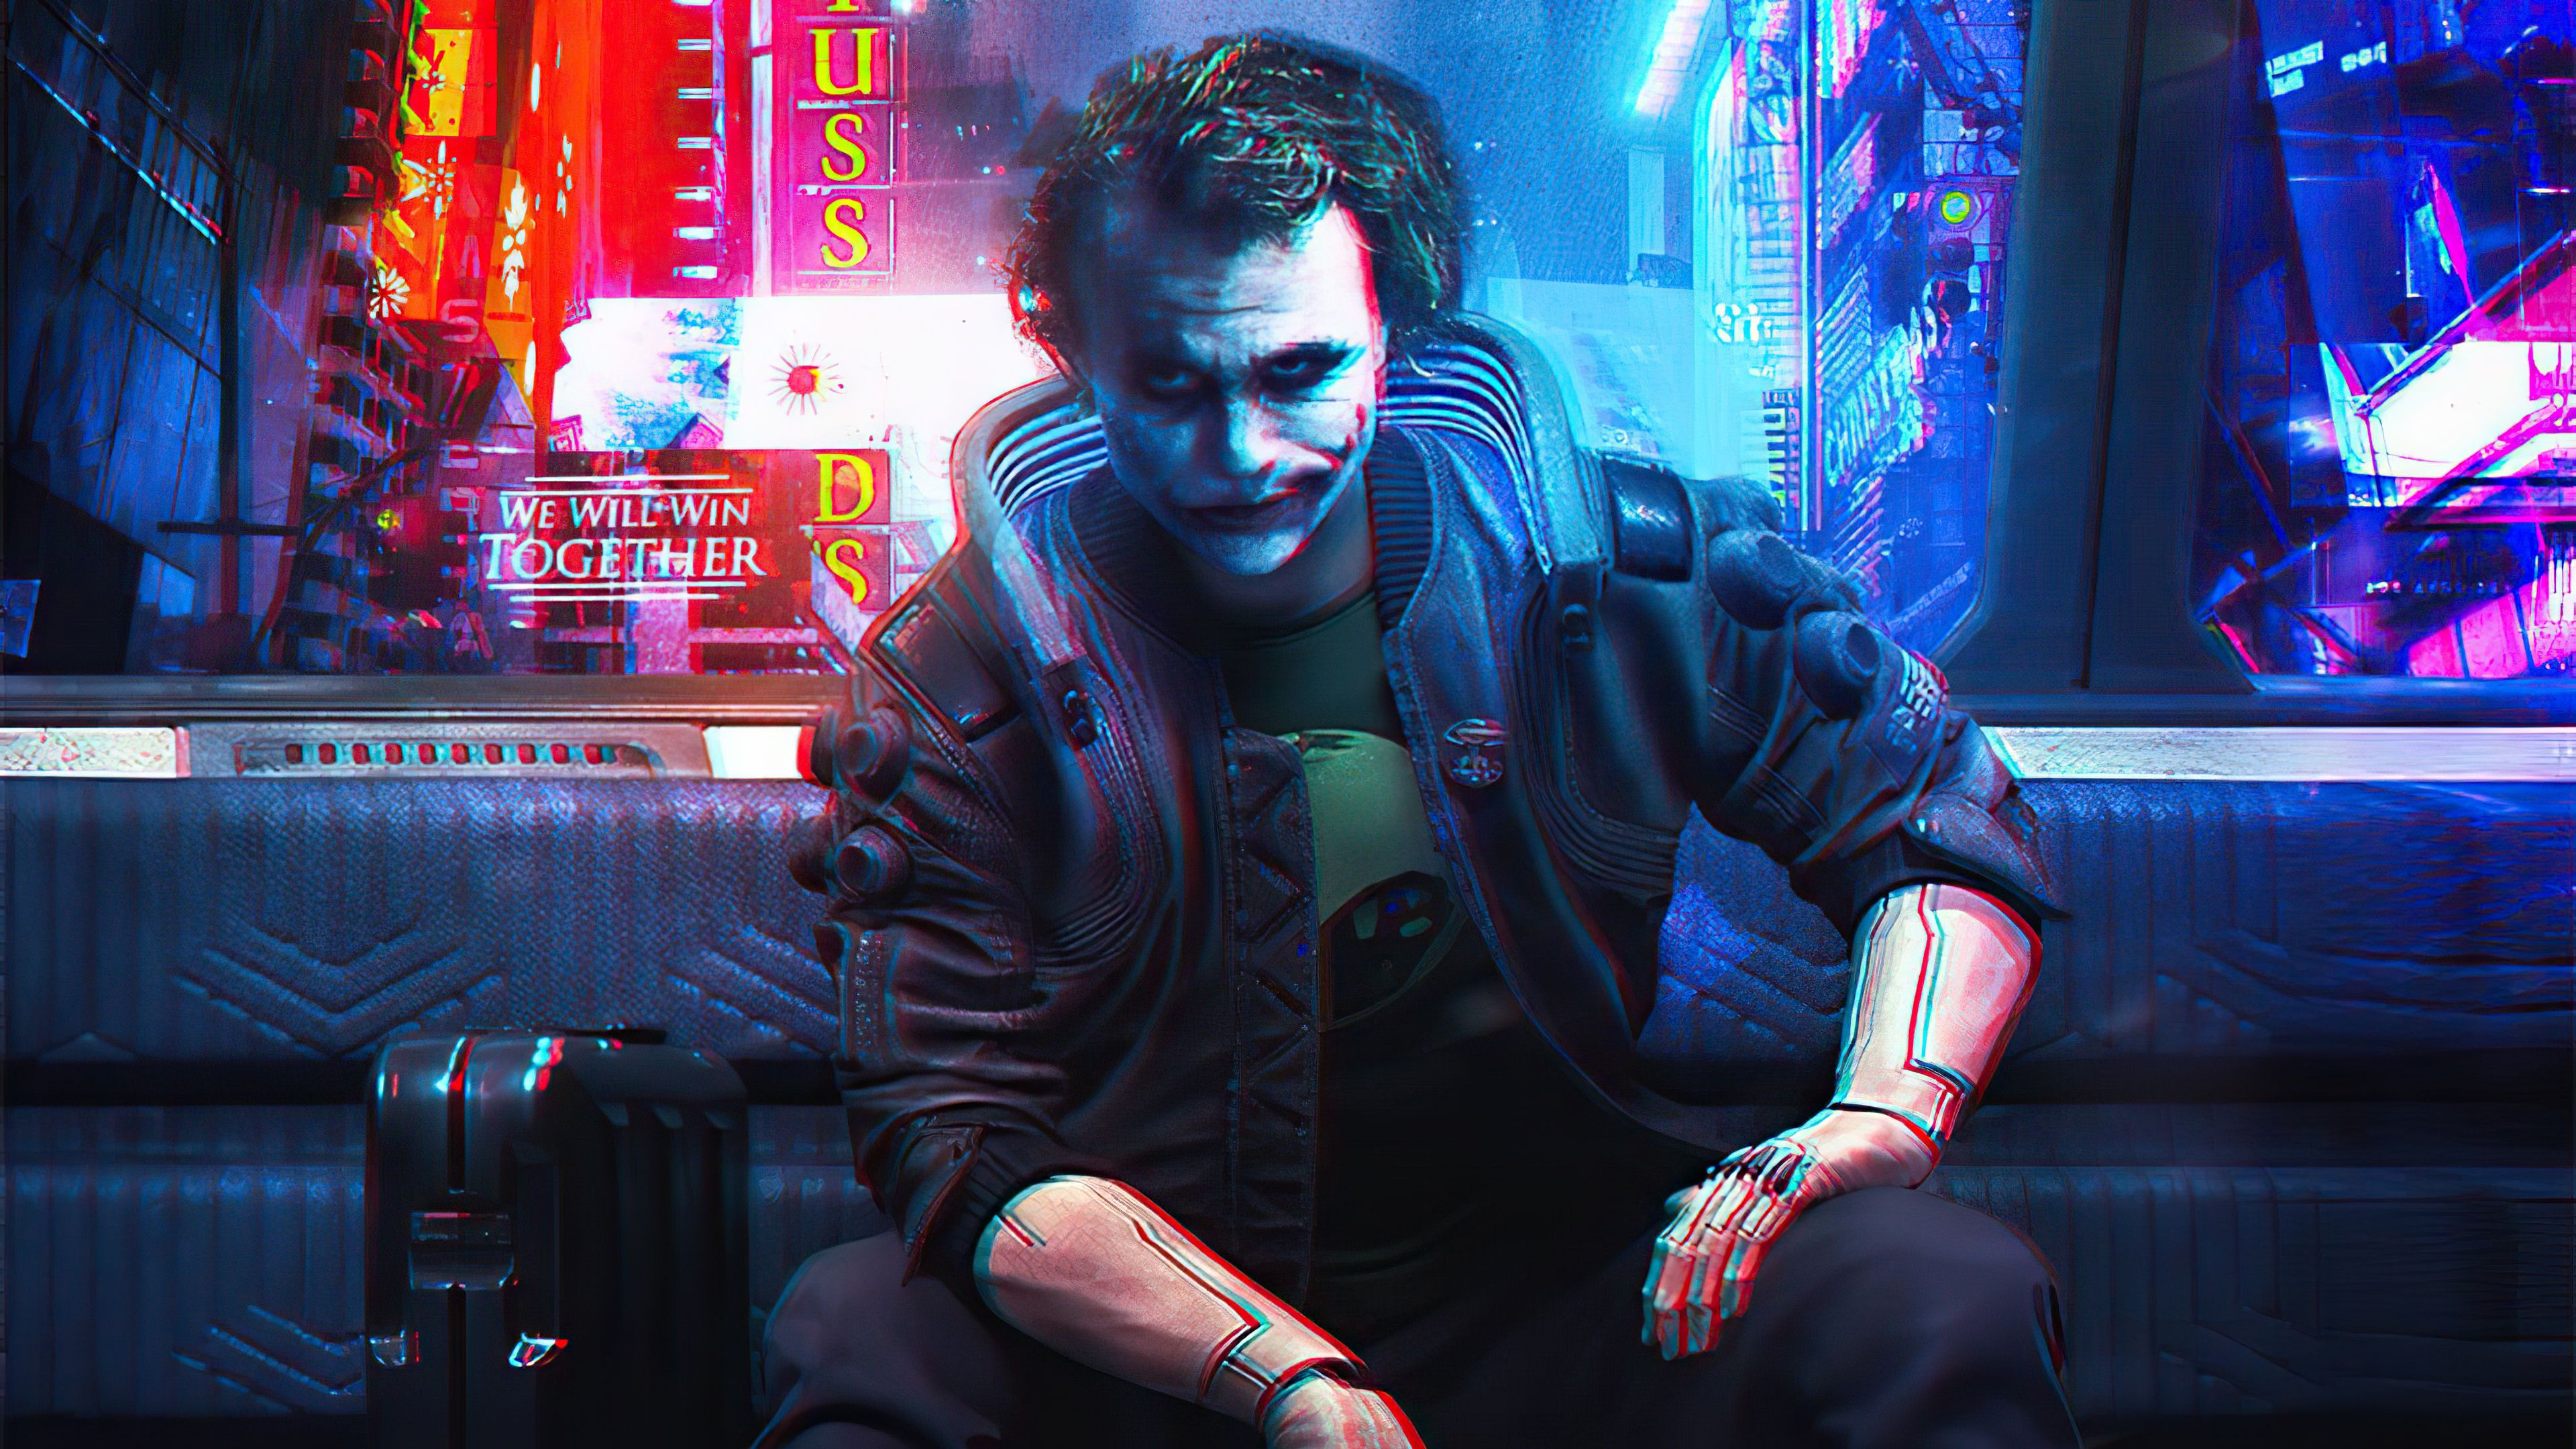 Joker Cyberpunk 4k, HD Superheroes, 4k Wallpaper, Image, Background, Photo and Picture